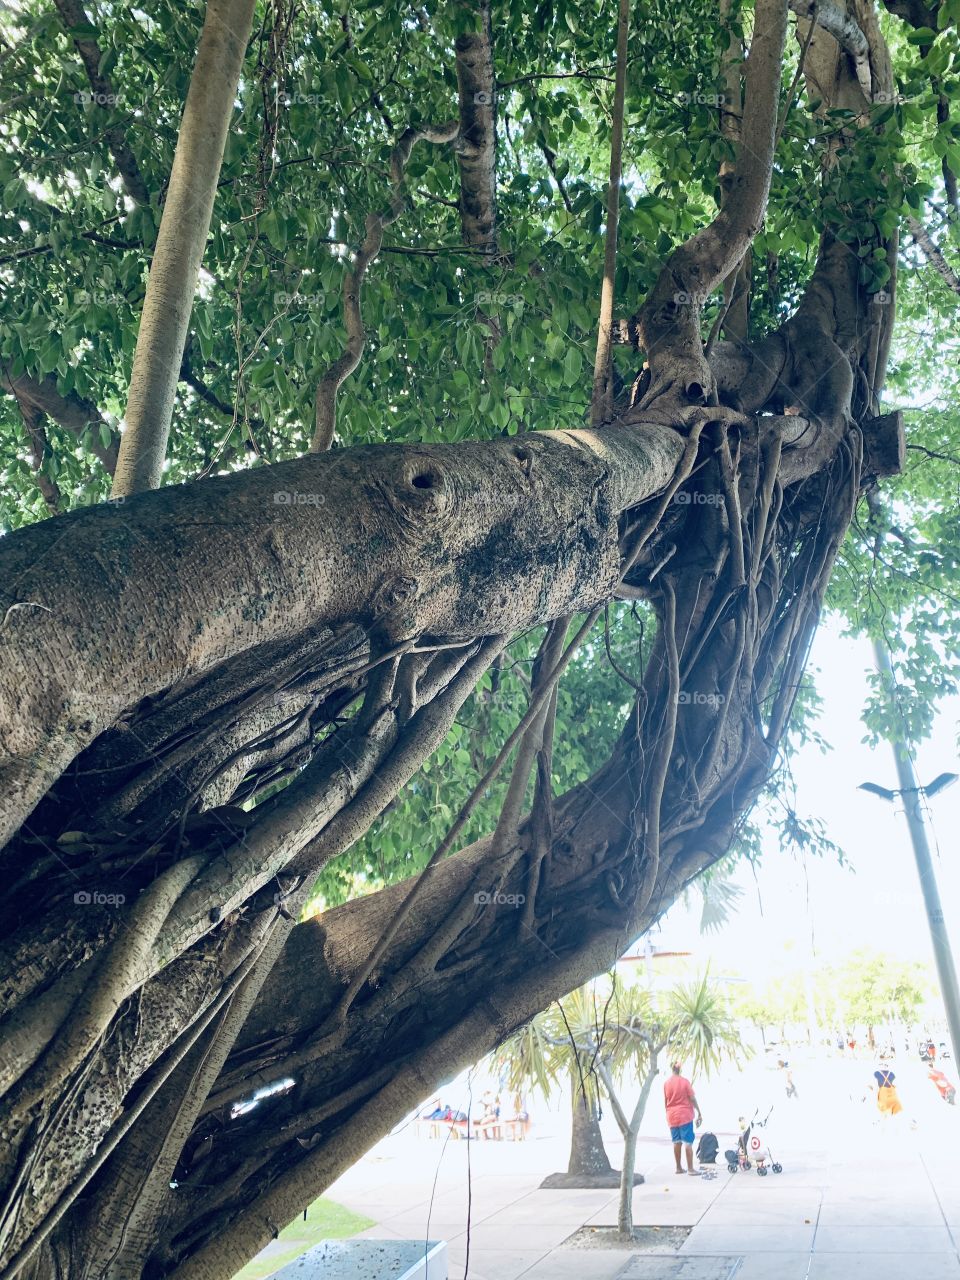 Amazing 100 year old tree! 🌳